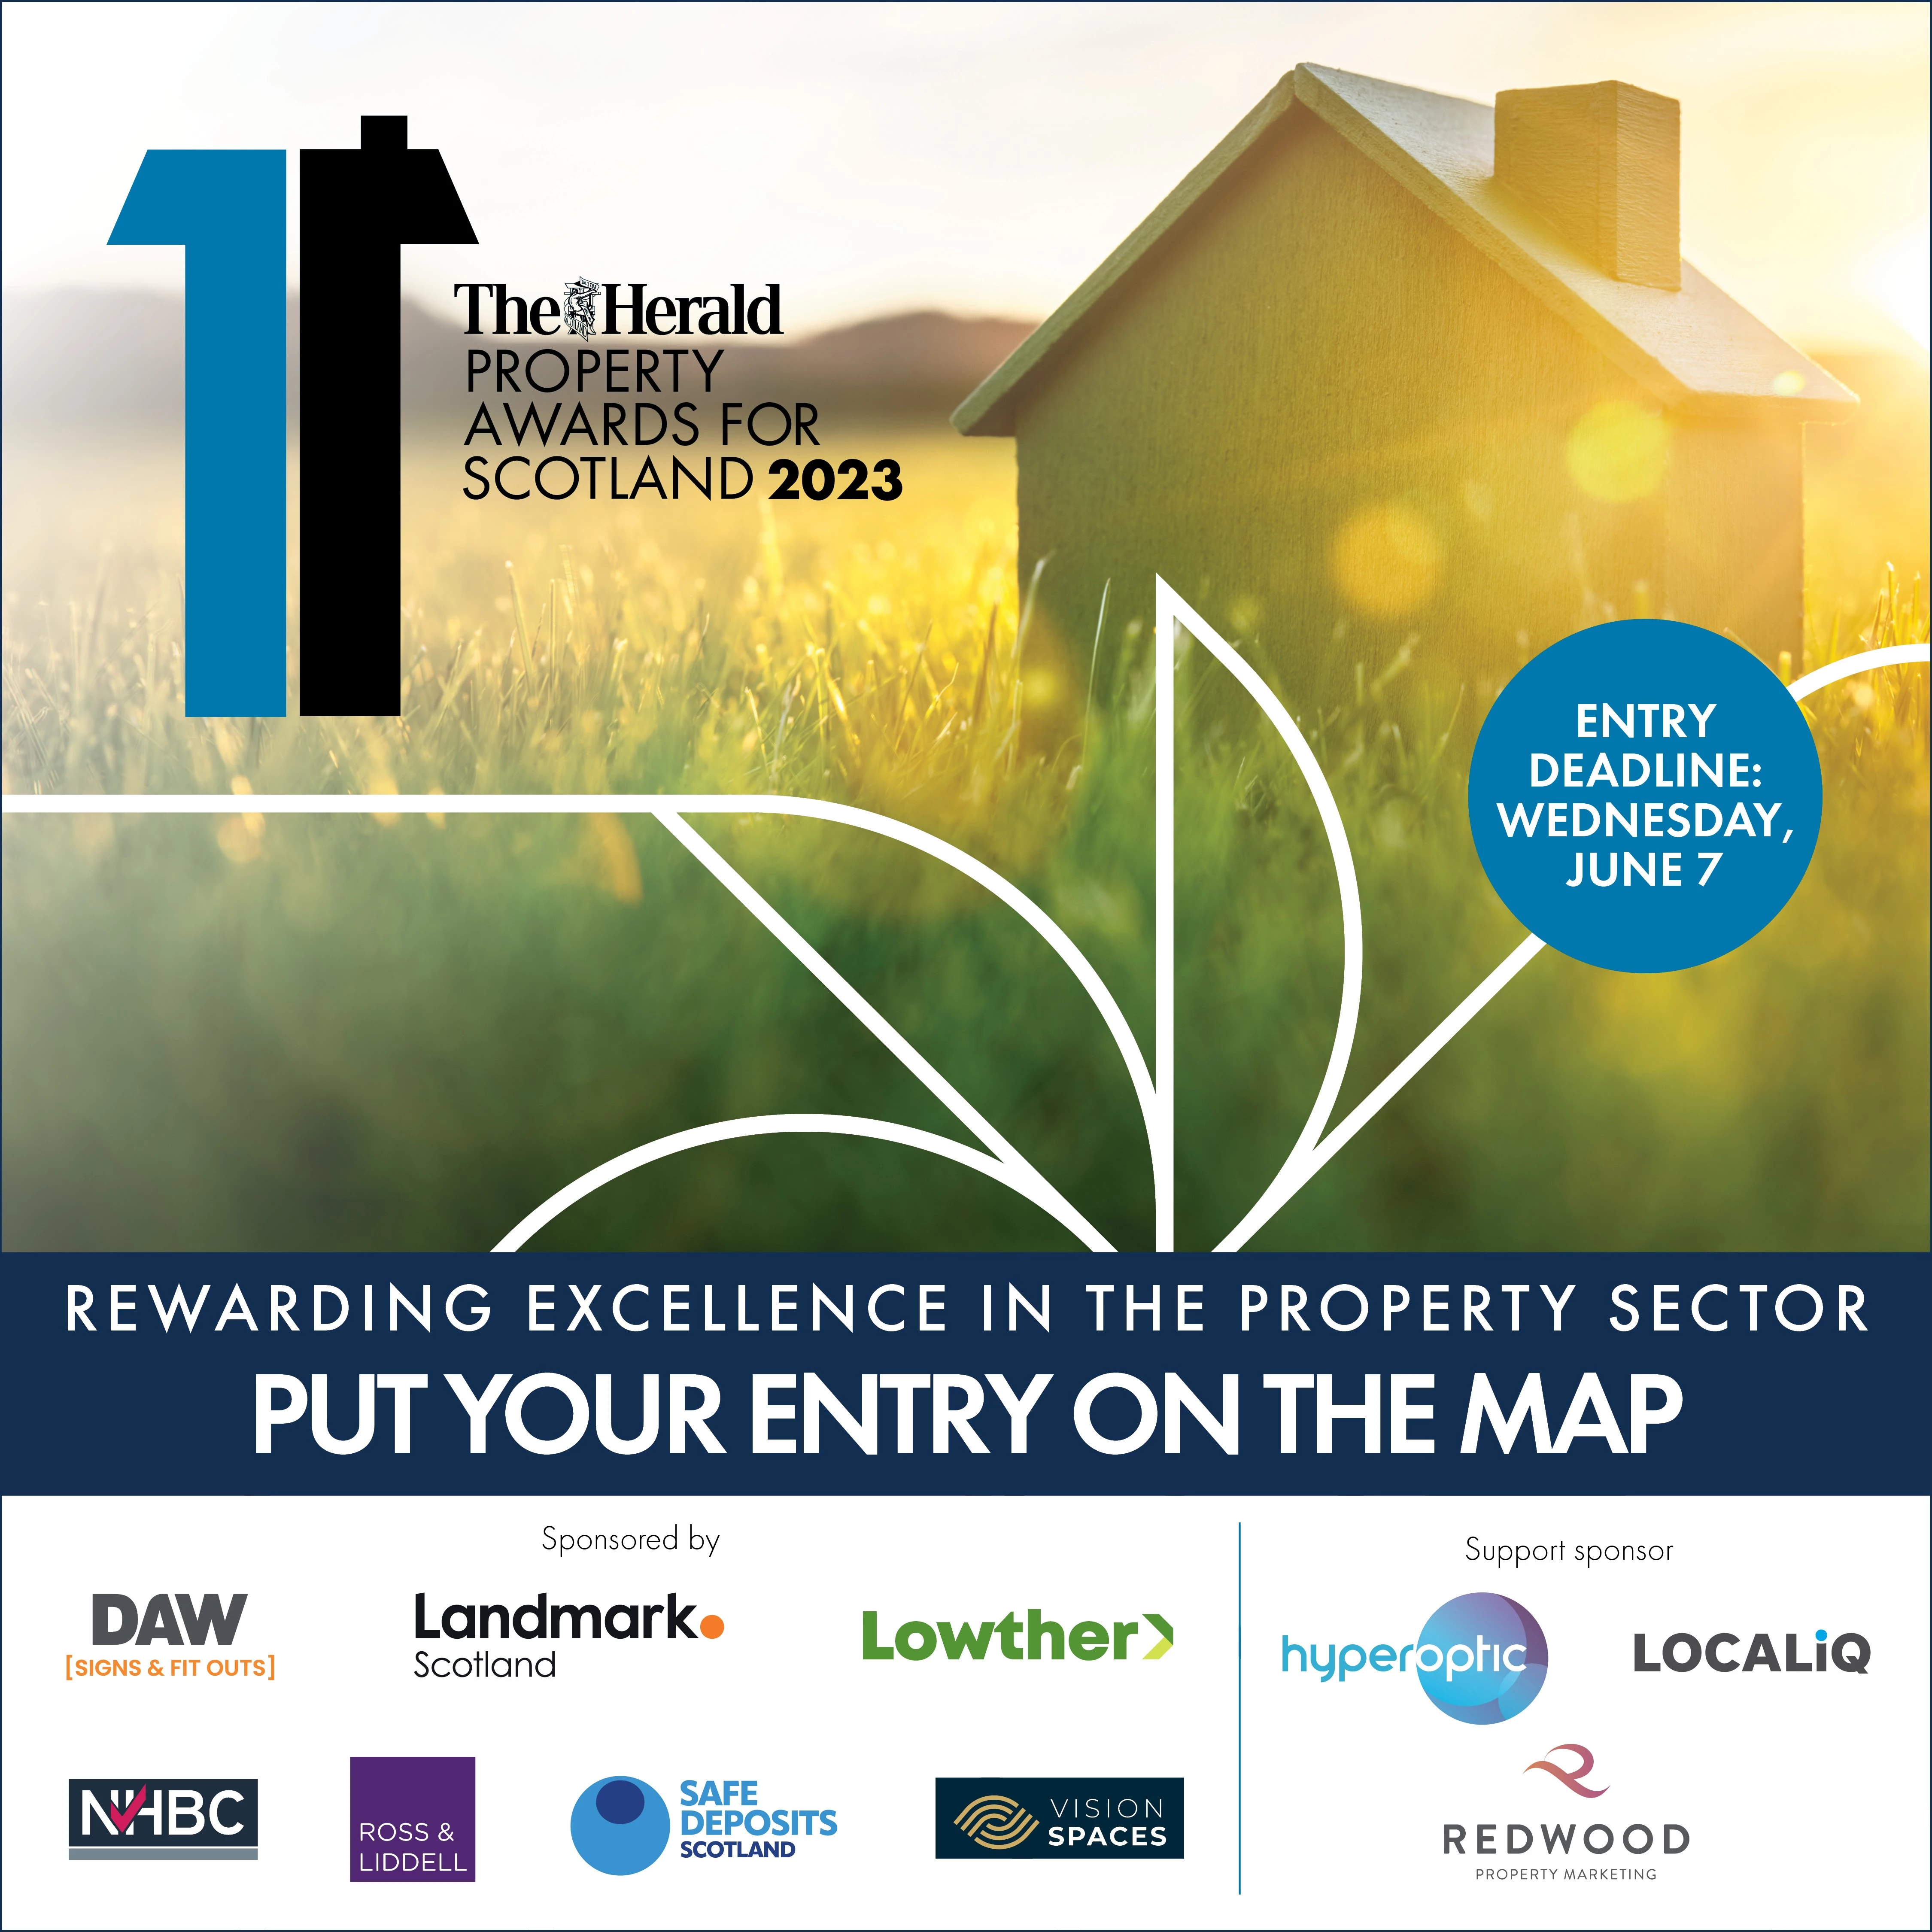 The Herald Property Awards for Scotland - SafeDeposits Scotland